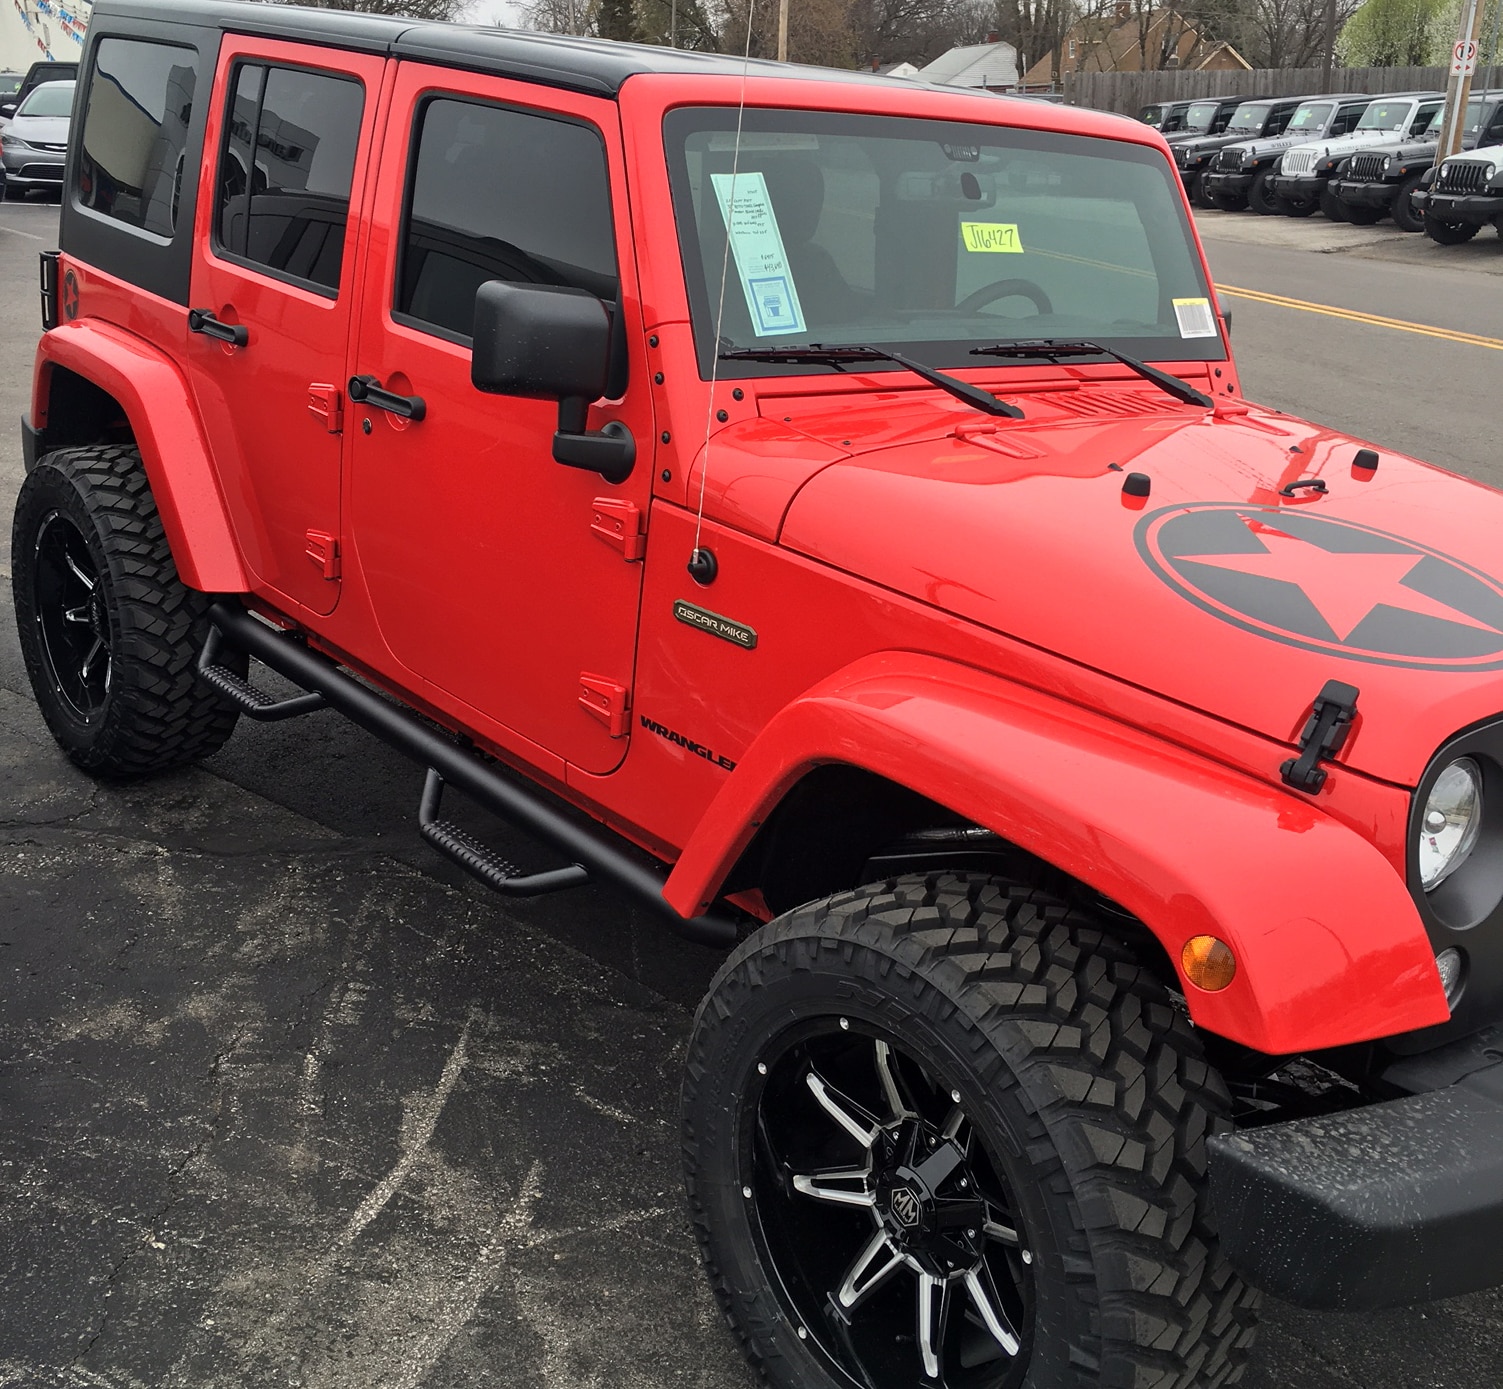 2018 red jeep wrangler in Missouri